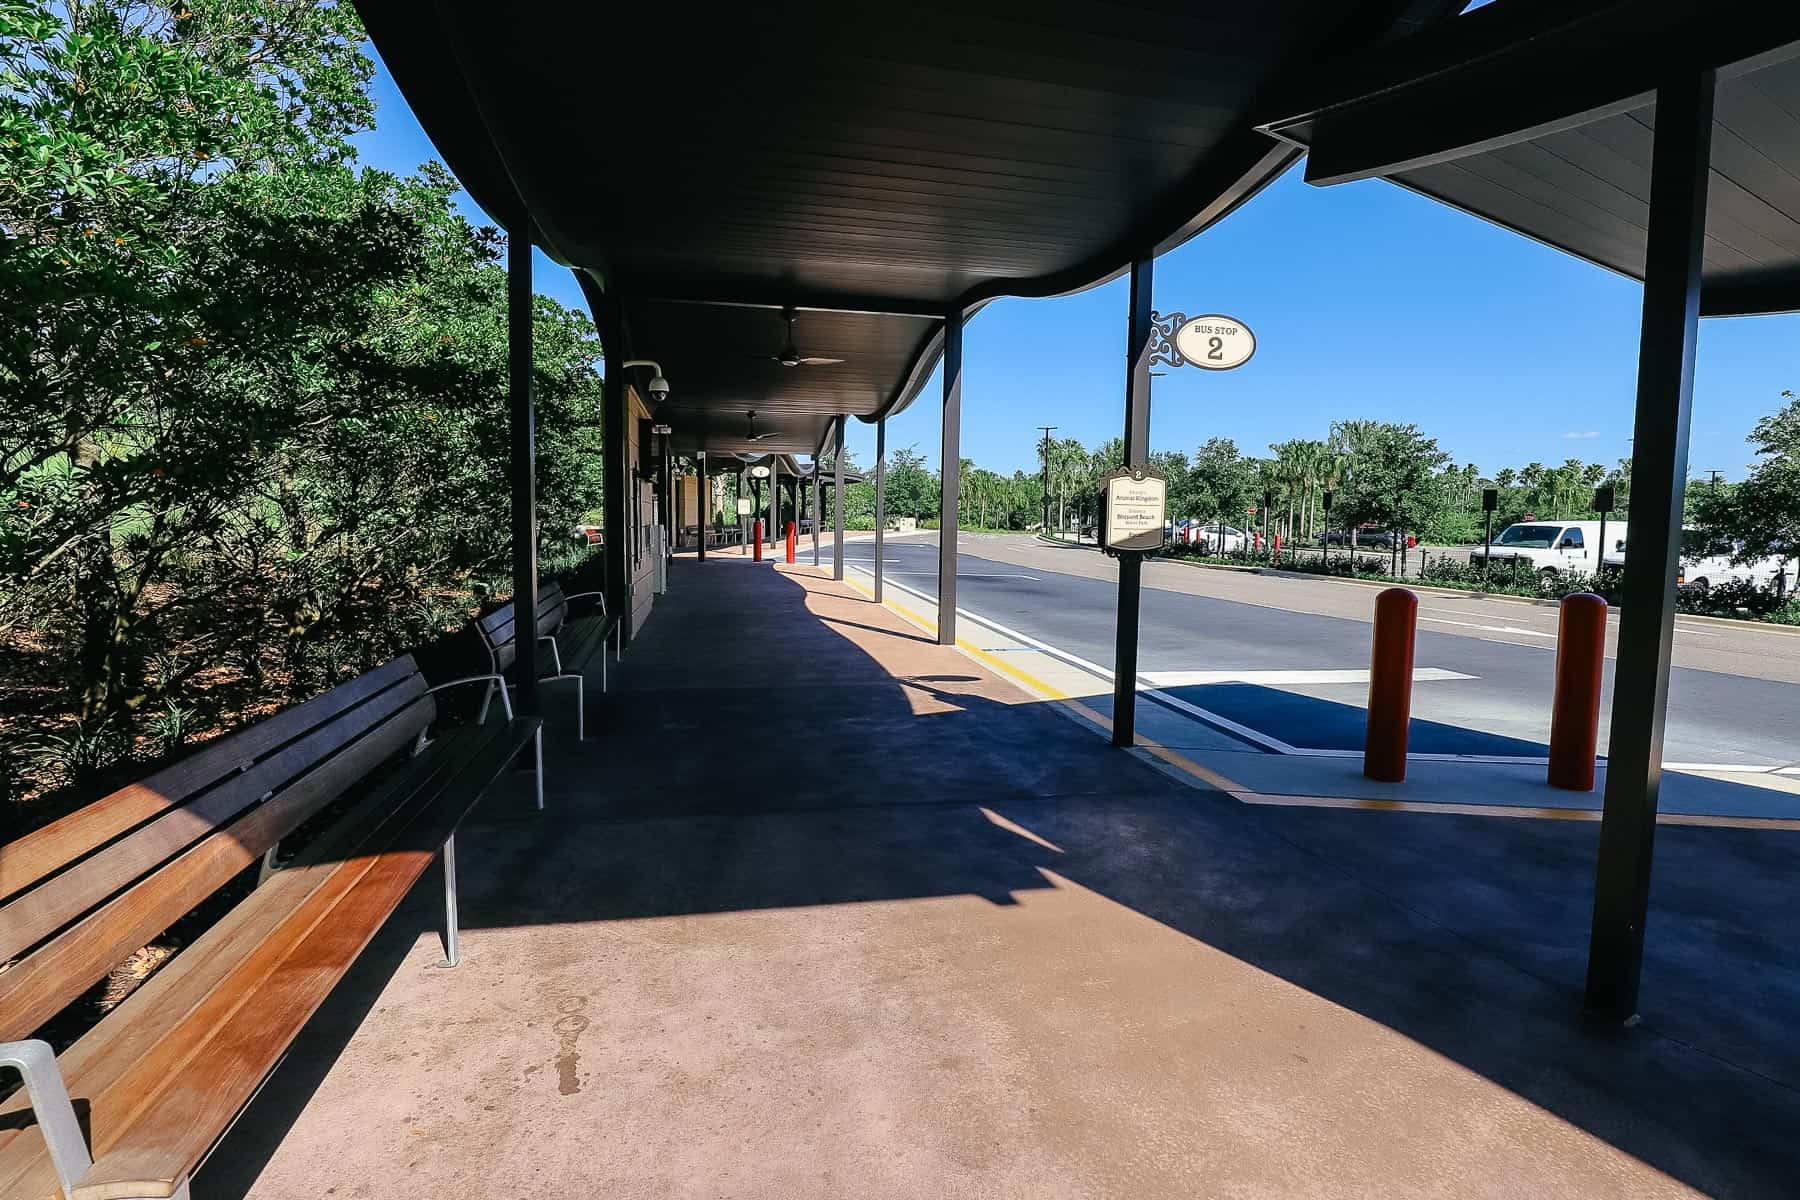 Bus stop for Animal Kingdom at Disney's Coronado Springs 